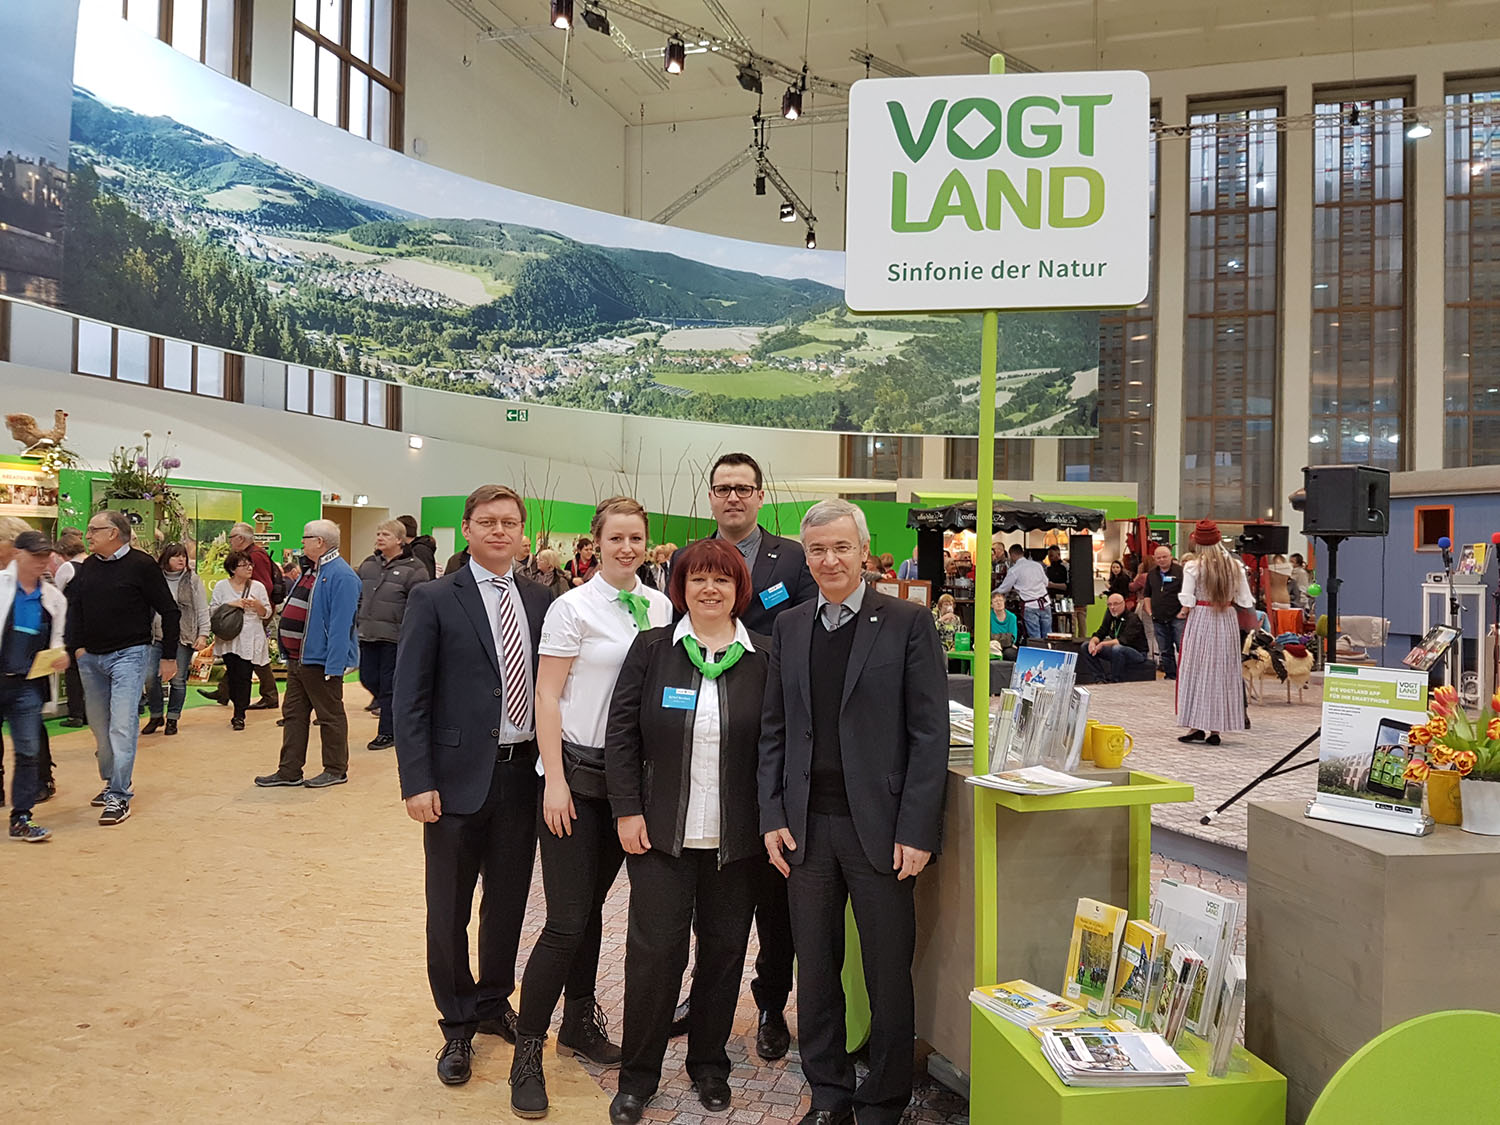 Grüne Woche: Tourismusverband Vogtland zieht positive Bilanz